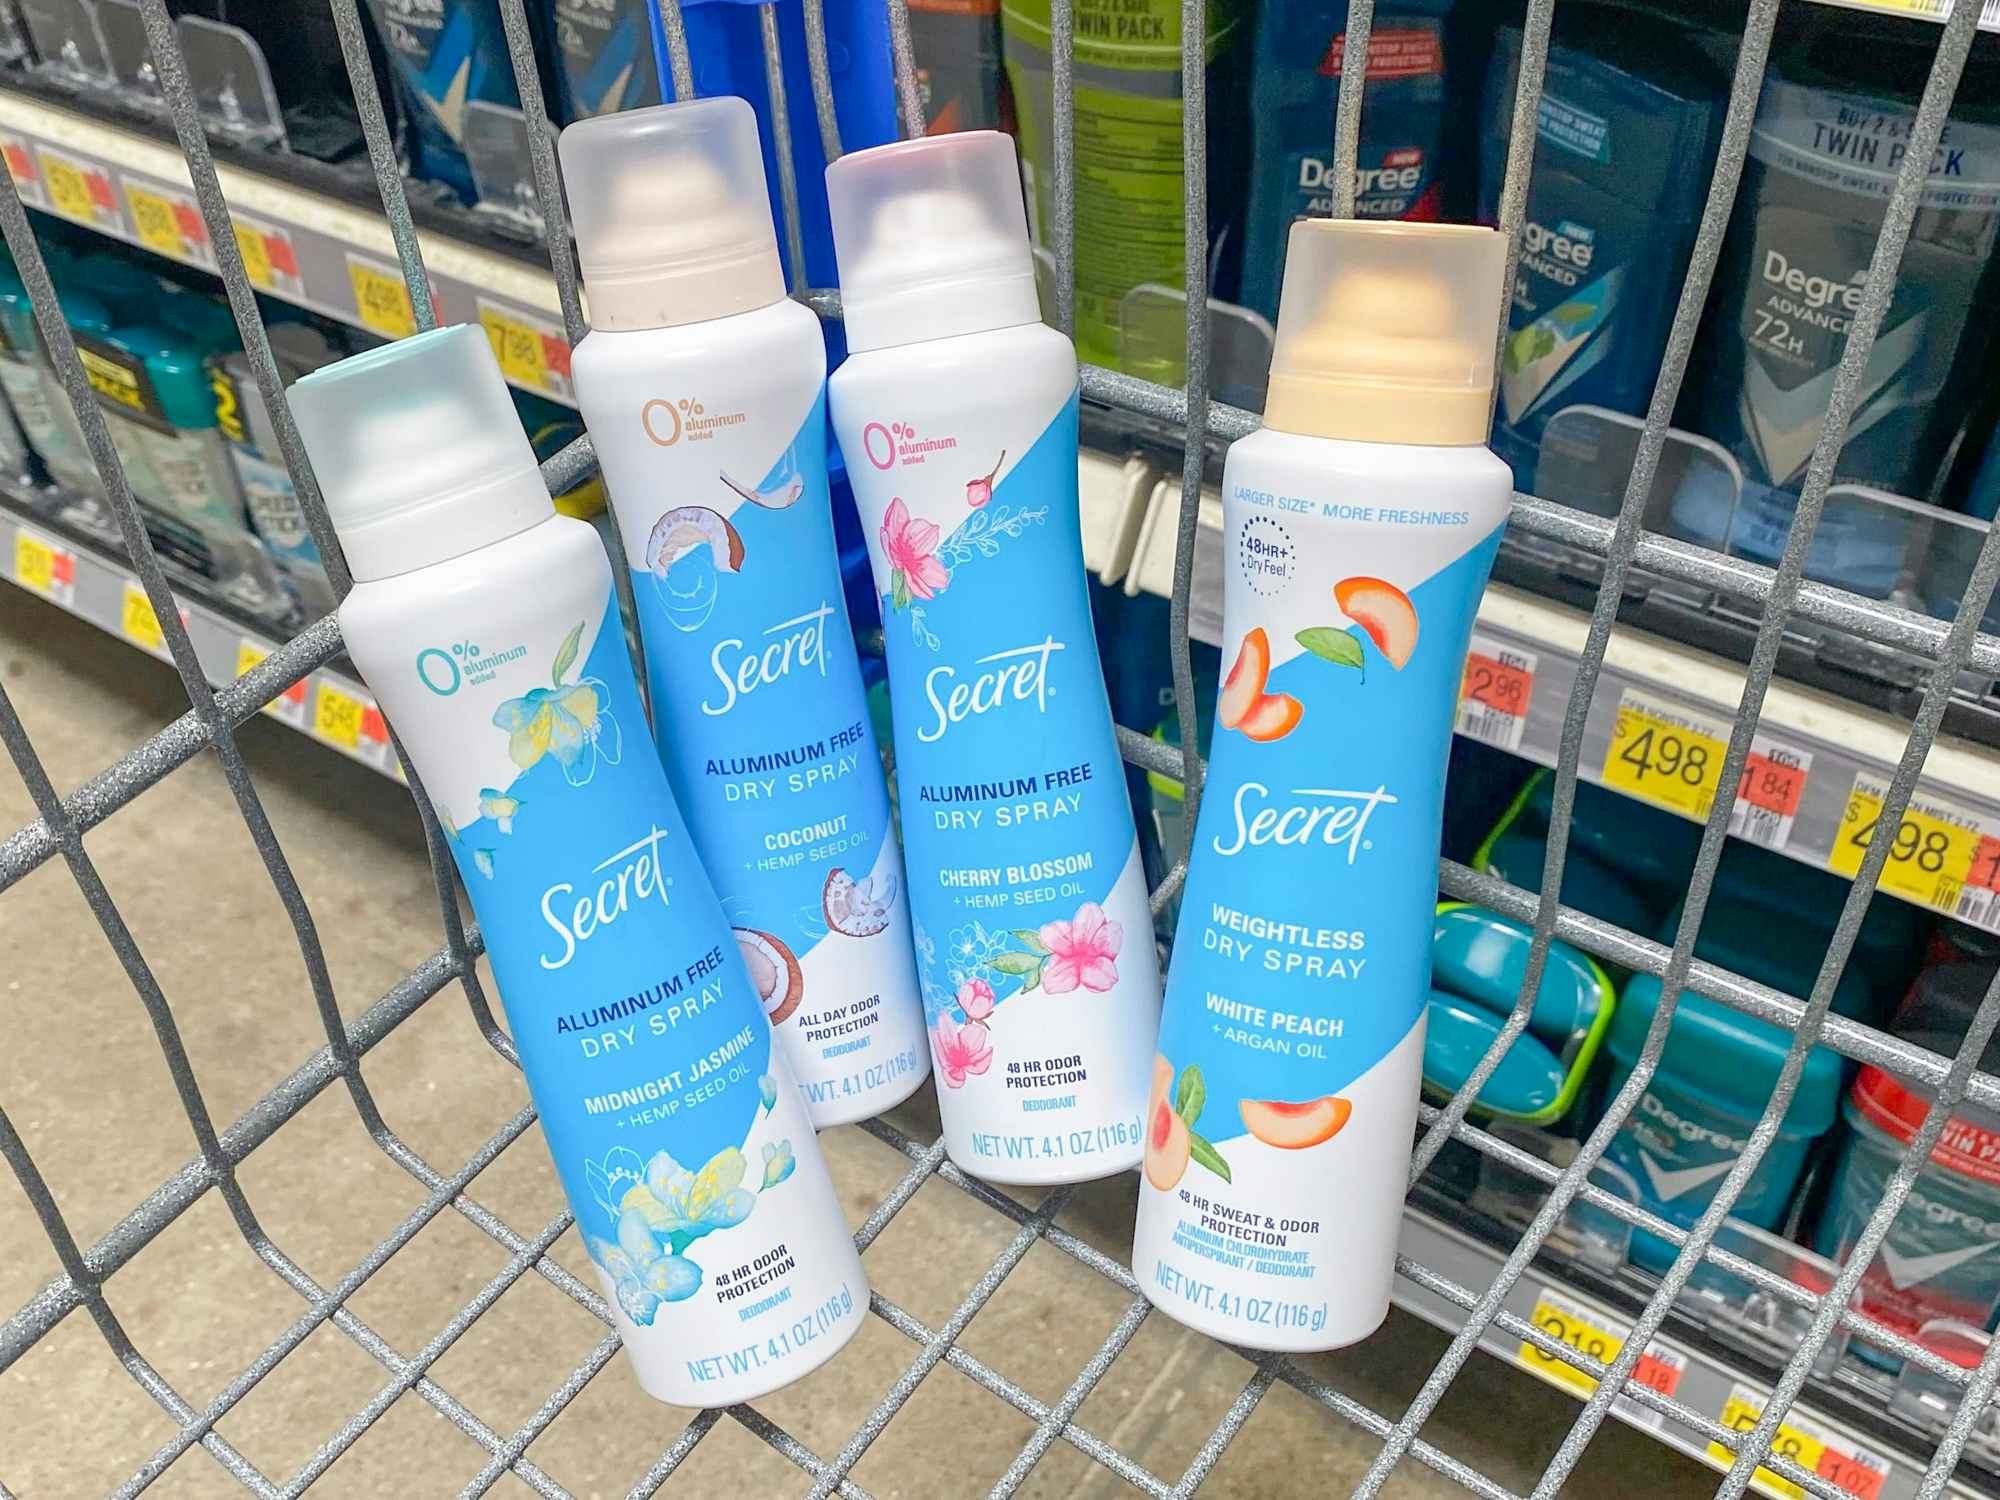 Some Secret Dry Spray deodorants in a Walmart shopping cart